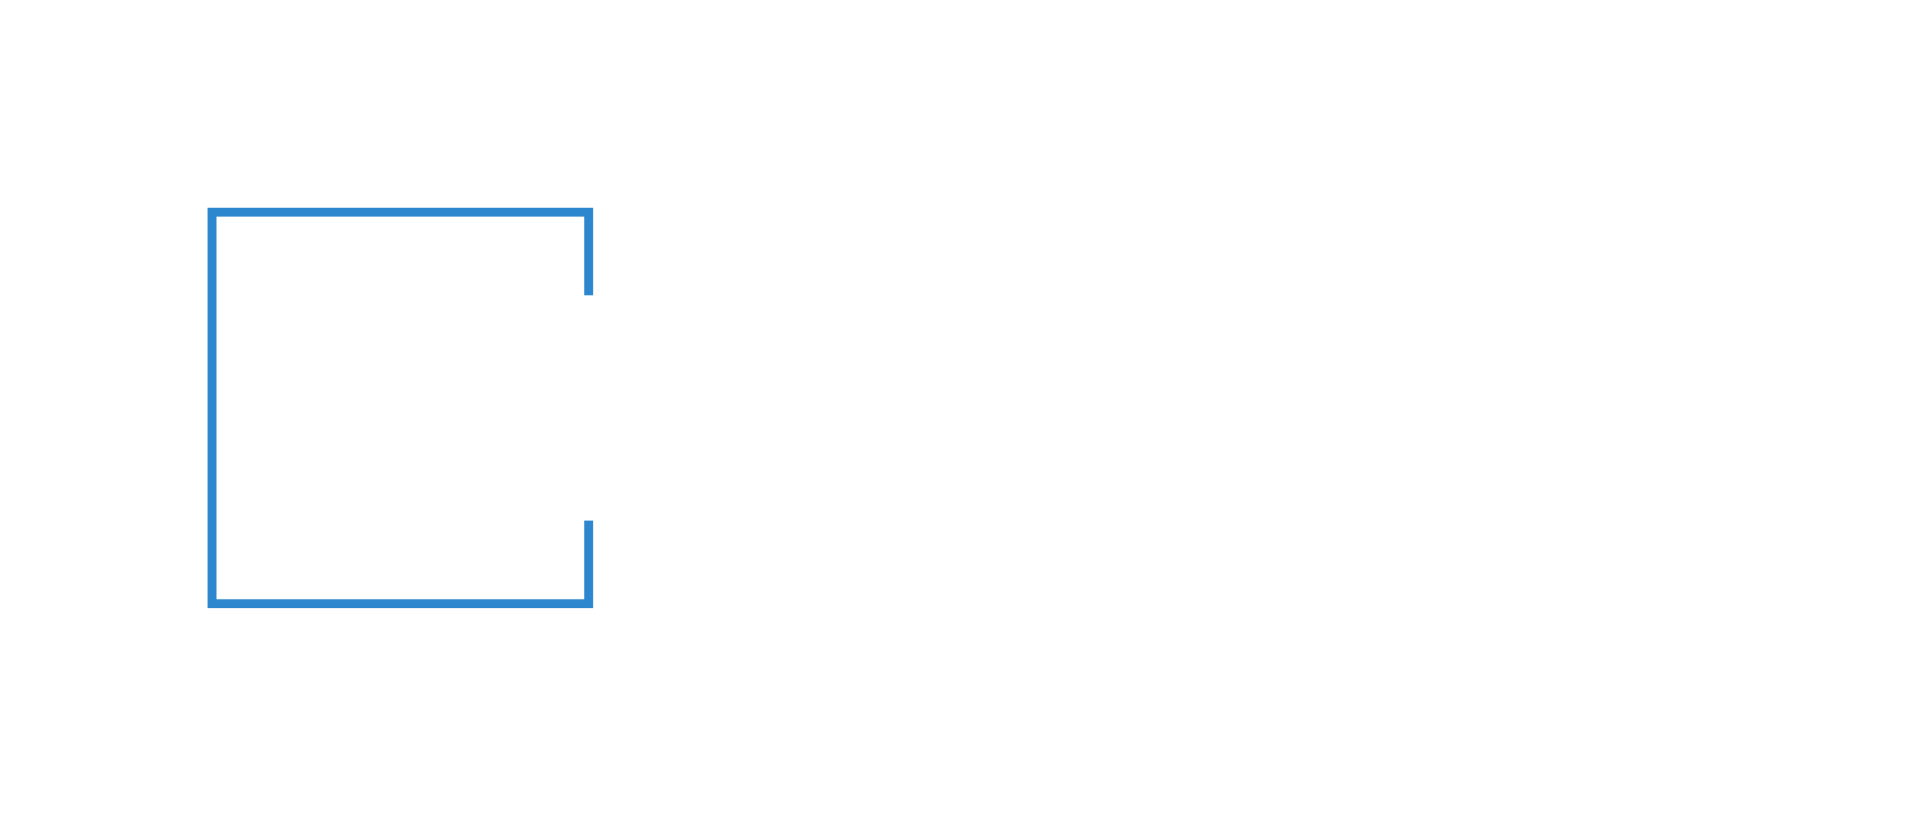 Deta Solution logo with transparent background.